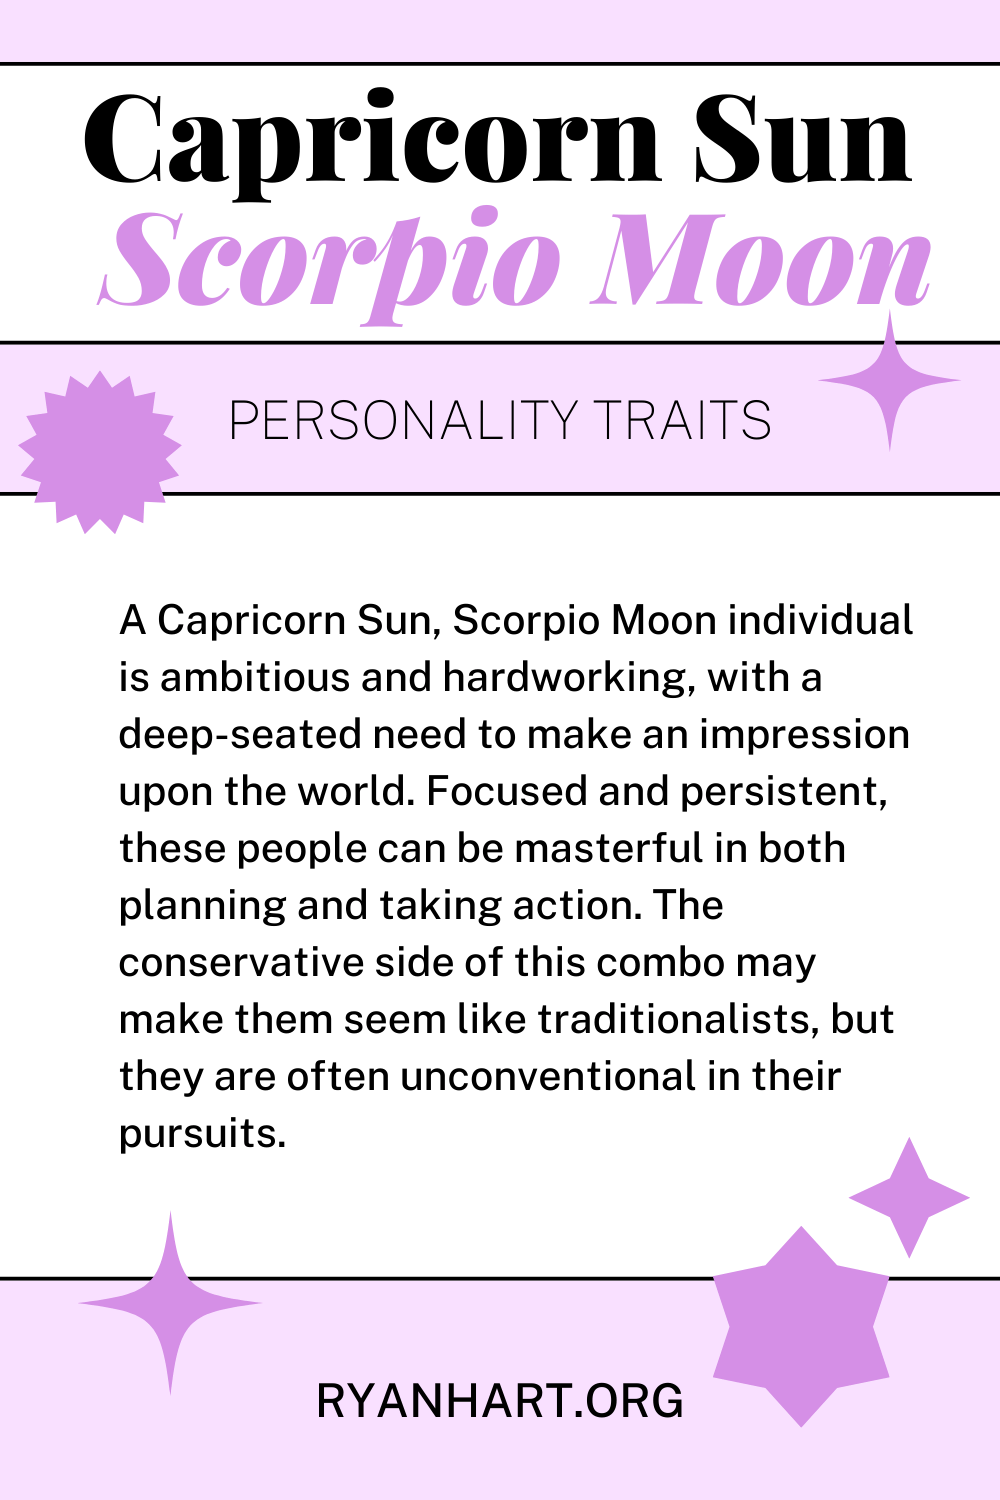  Tilmaamaha shakhsi ahaaneed ee Capricorn Sun Scorpio Moon